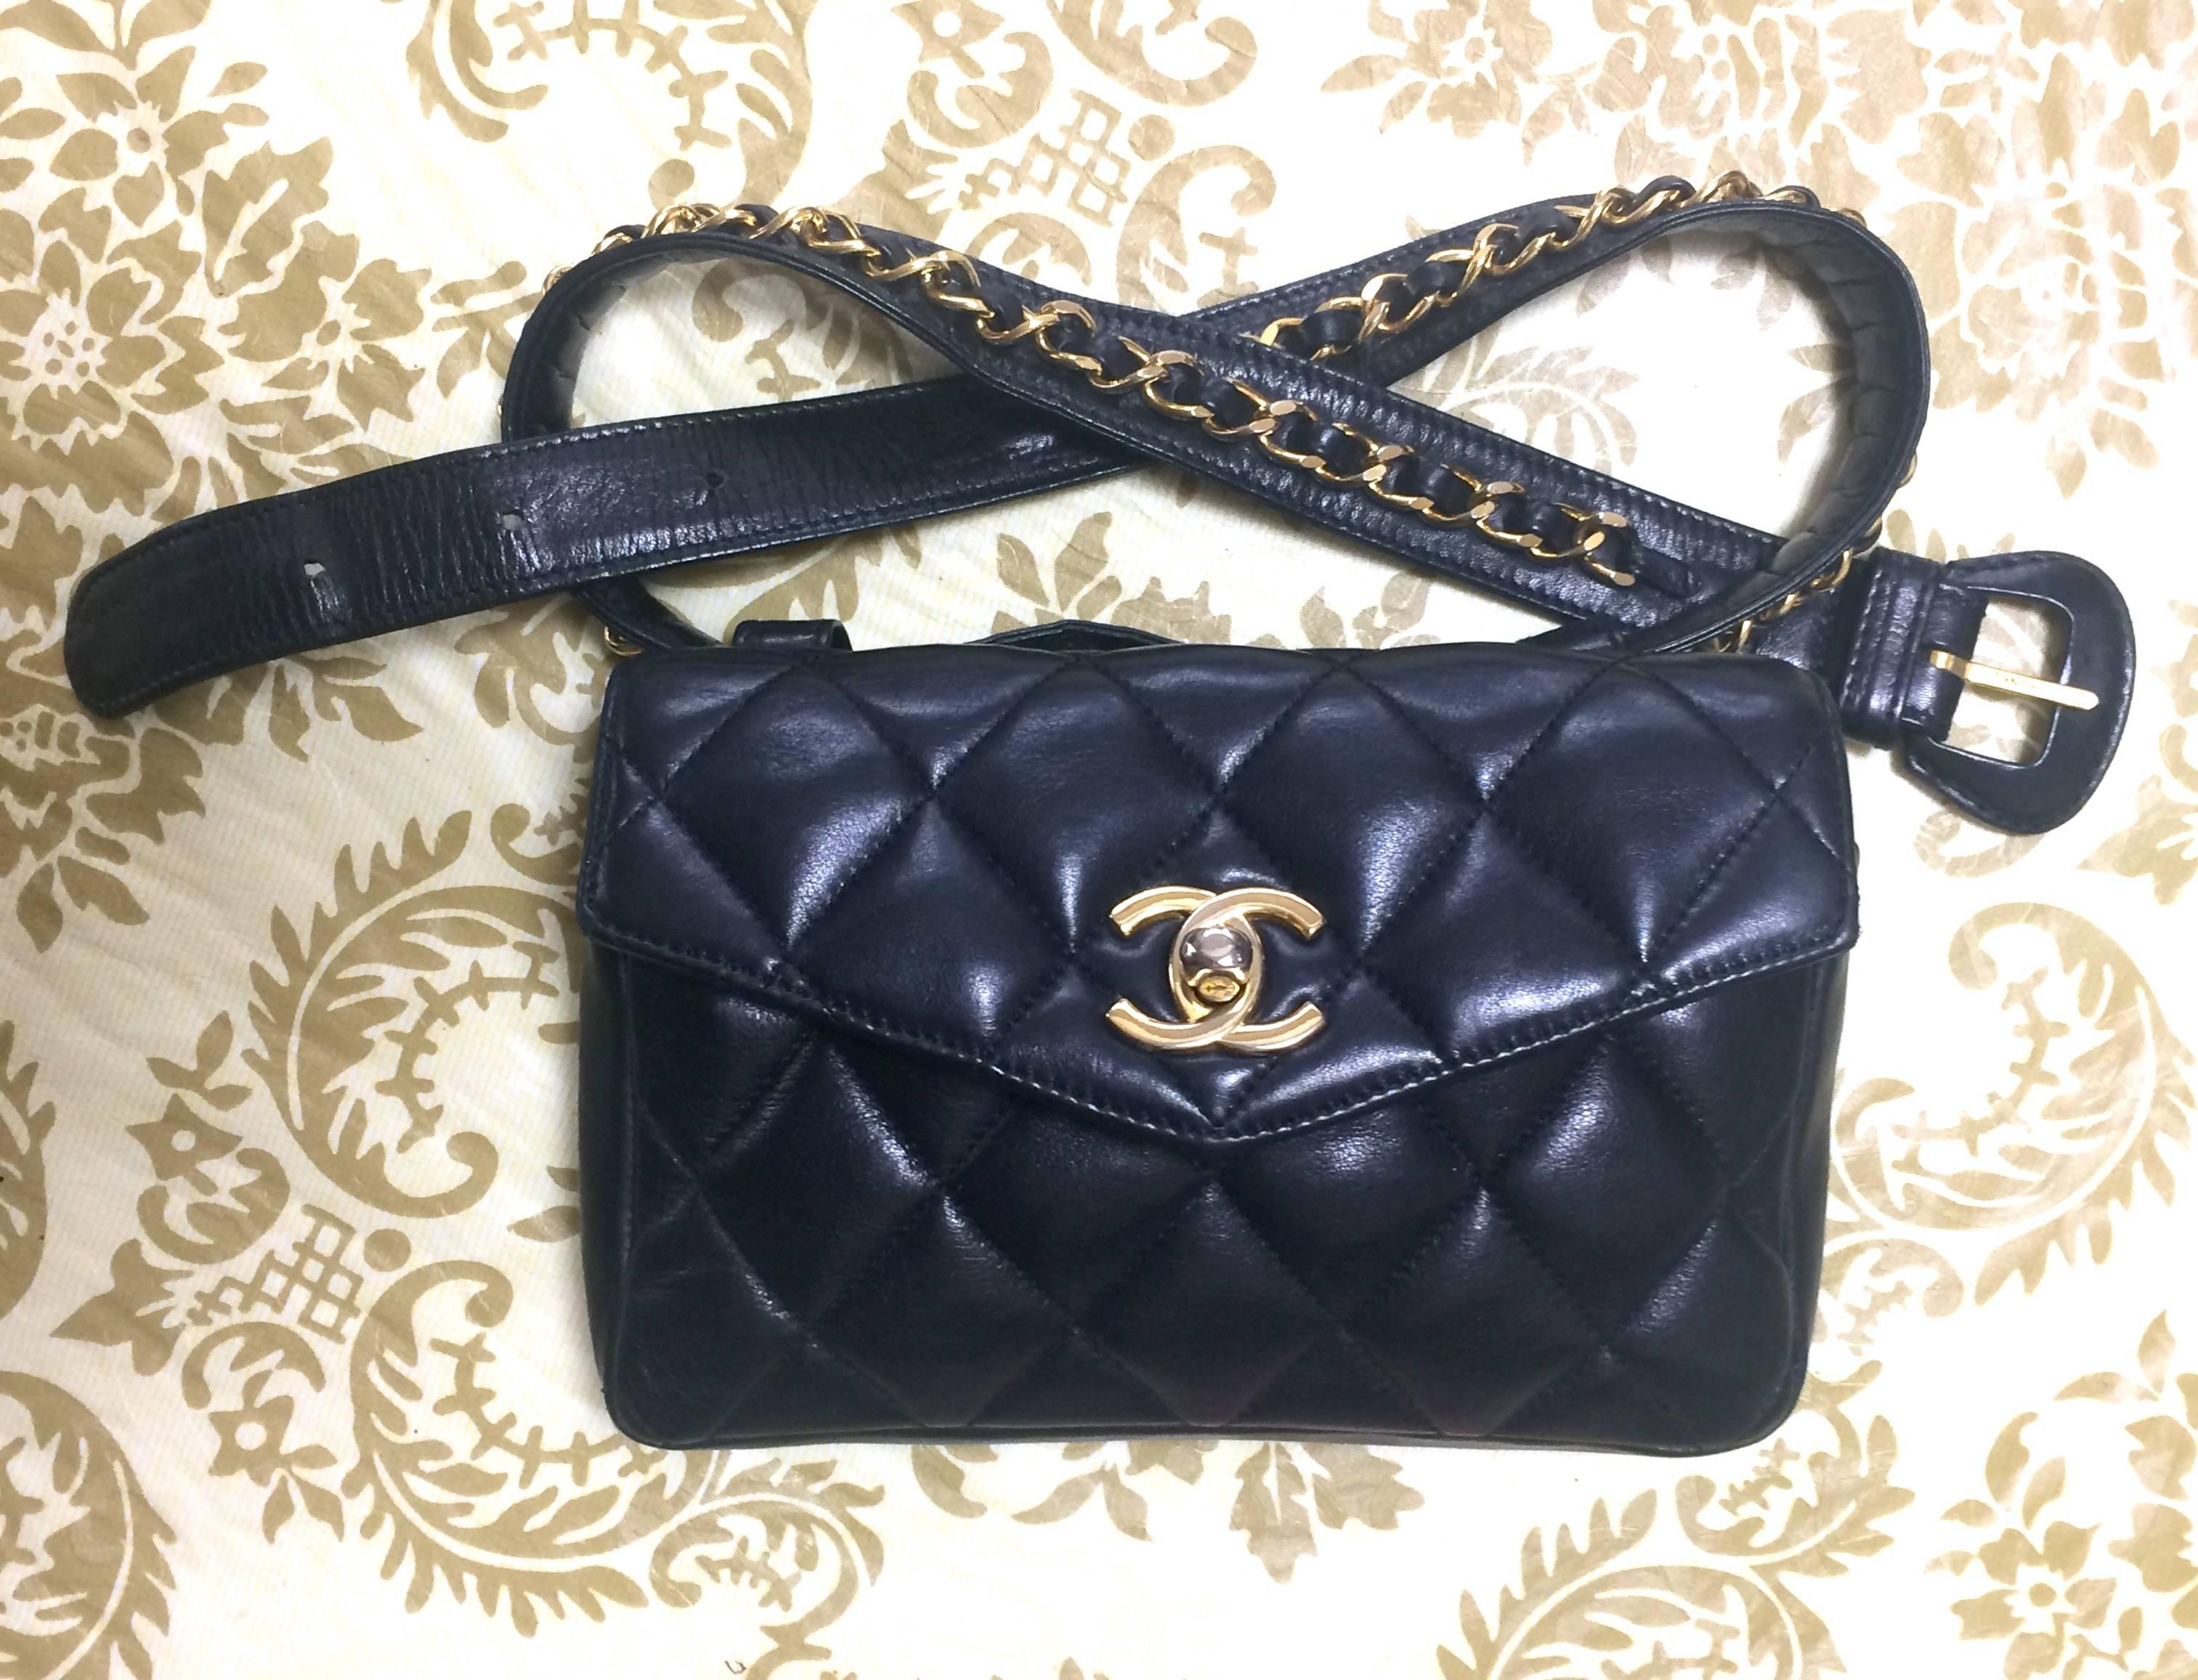 Vintage CHANEL black leather waist bag, fanny pack with golden chain belt & CC. 5